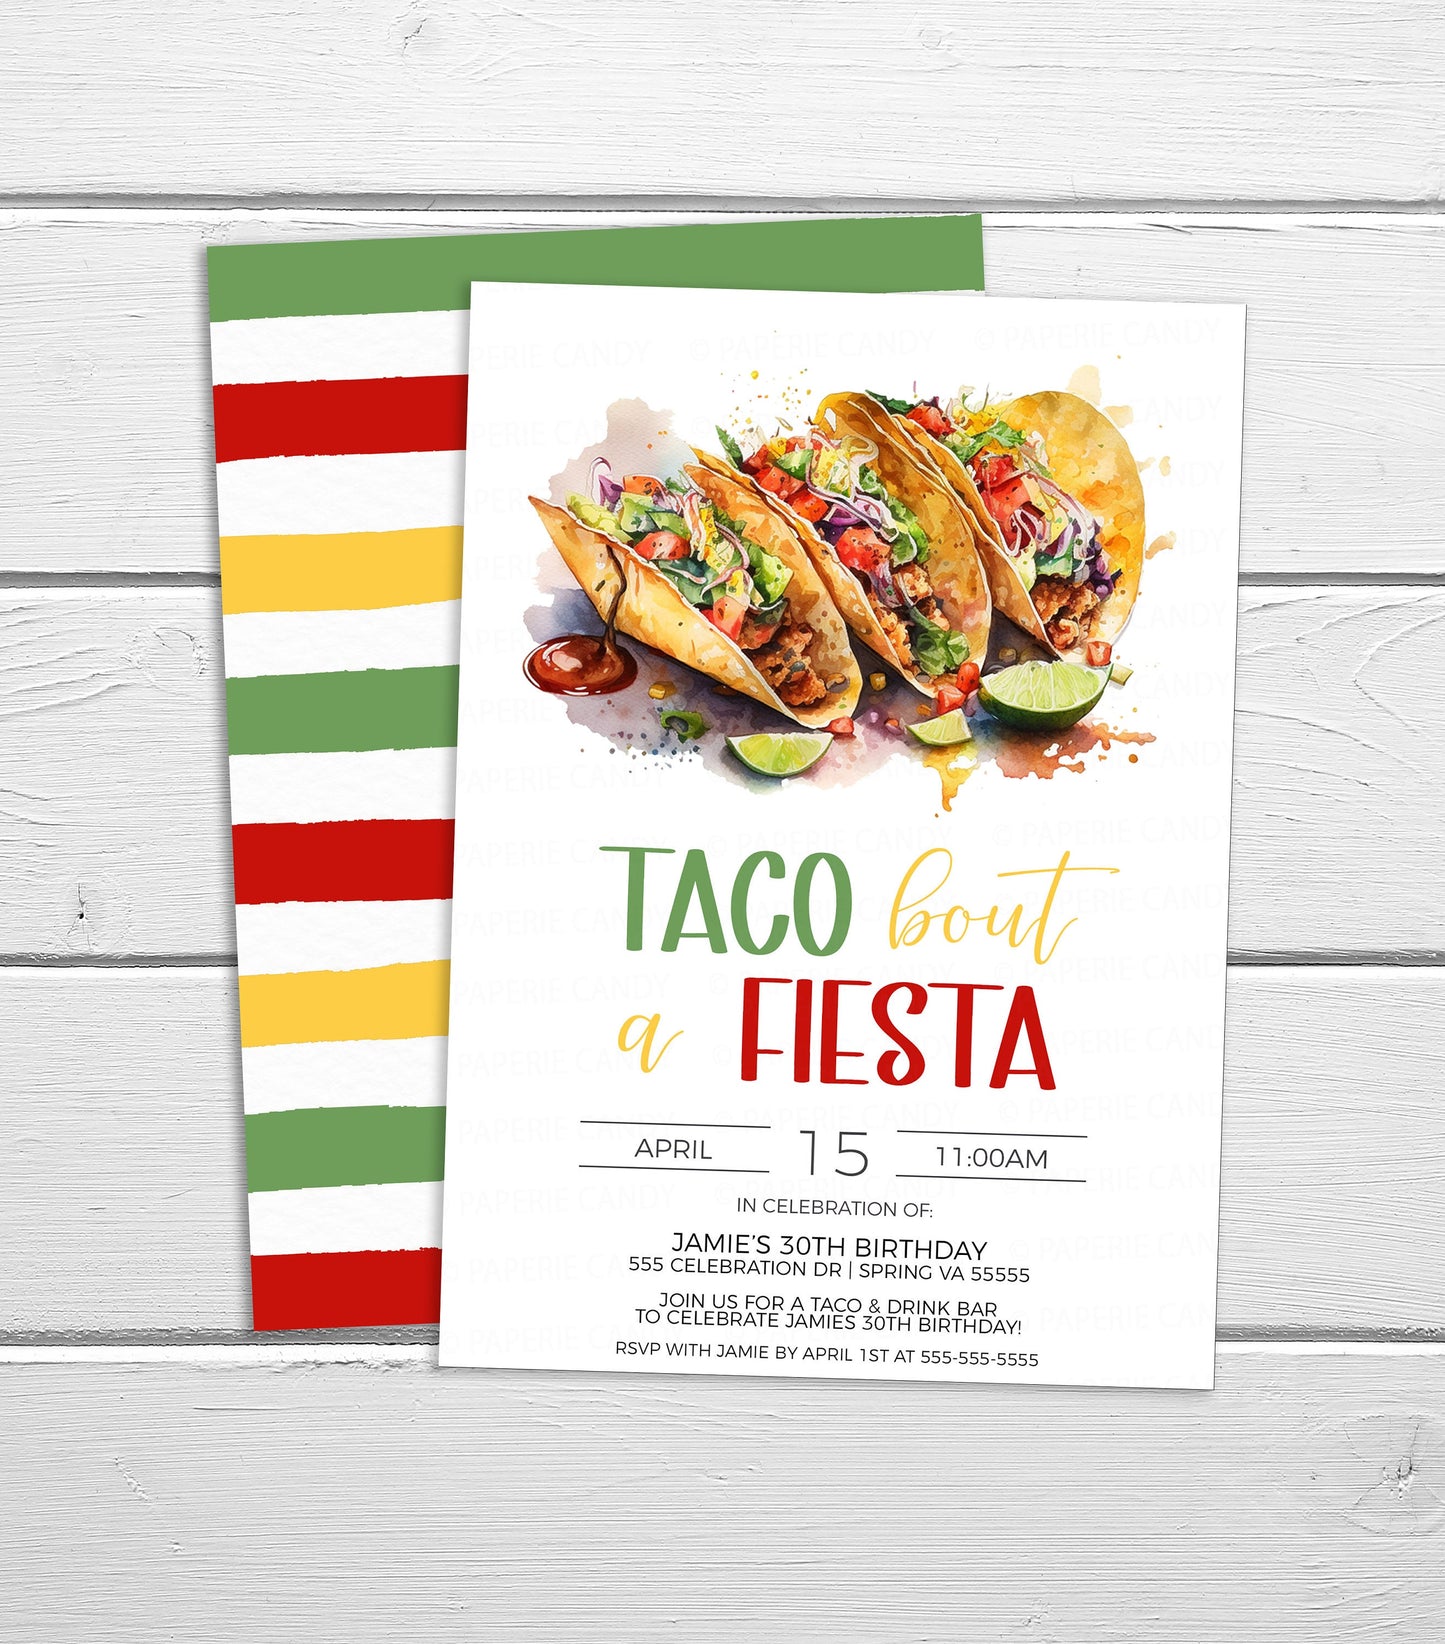 Fiesta Party Invitation, Taco Bout A Fiesta Invite, Fiesta Birthday Celebration, Taco Bar Mexican Themed Party, Editable Printable Template